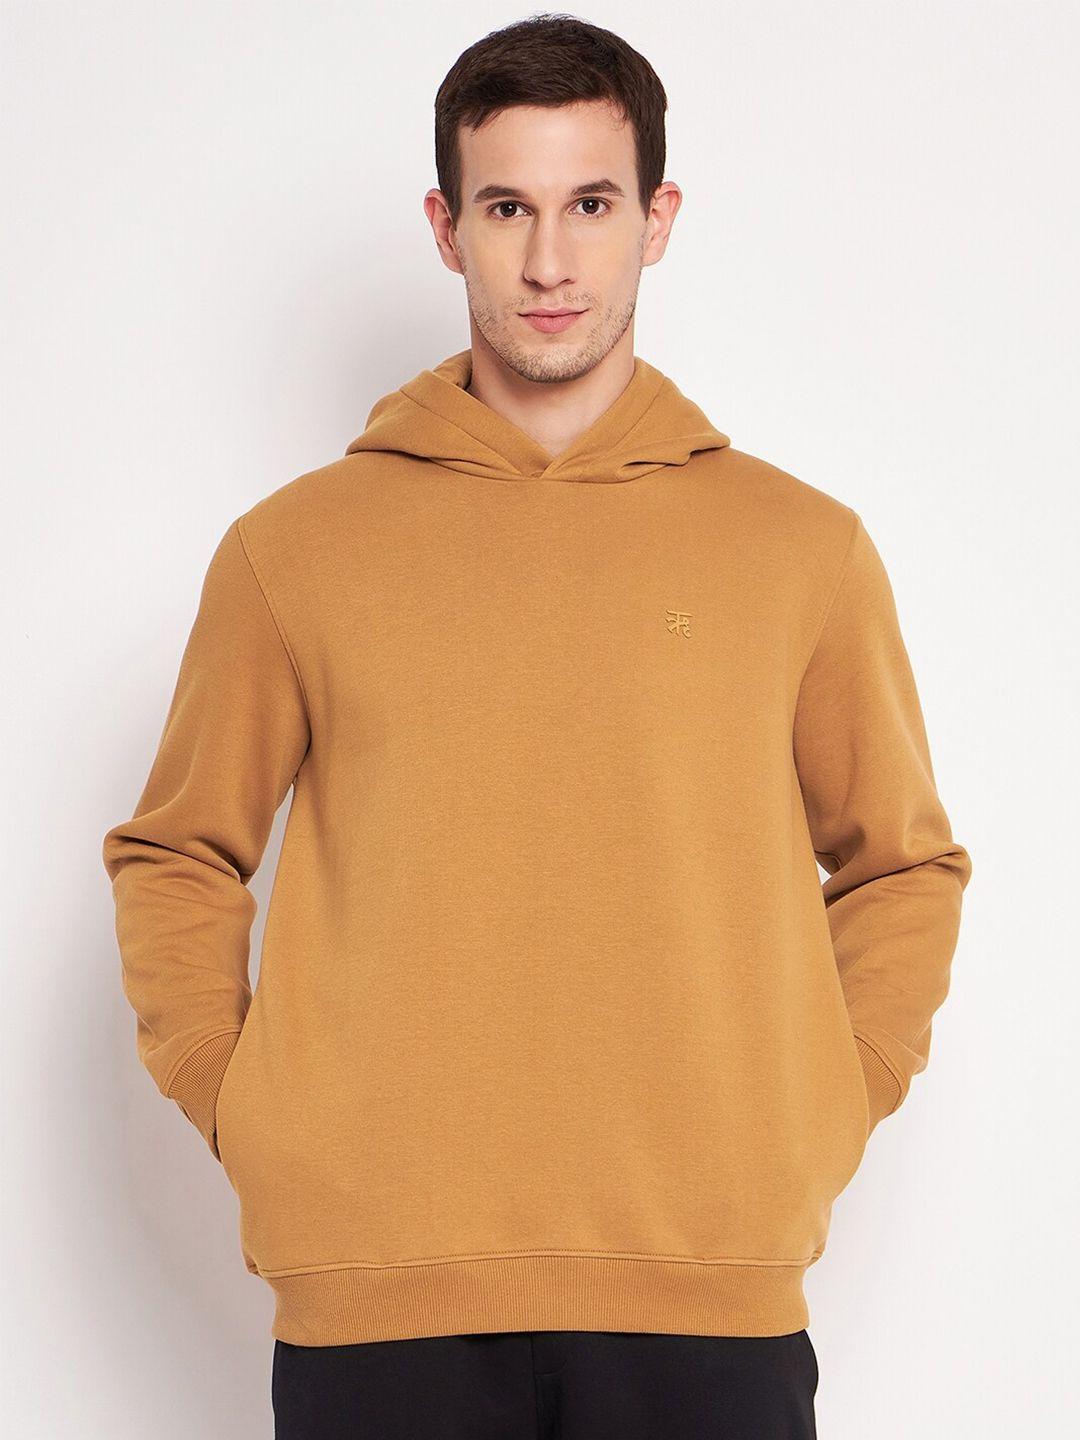 edrio hooded long sleeves cotton pullover sweatshirt